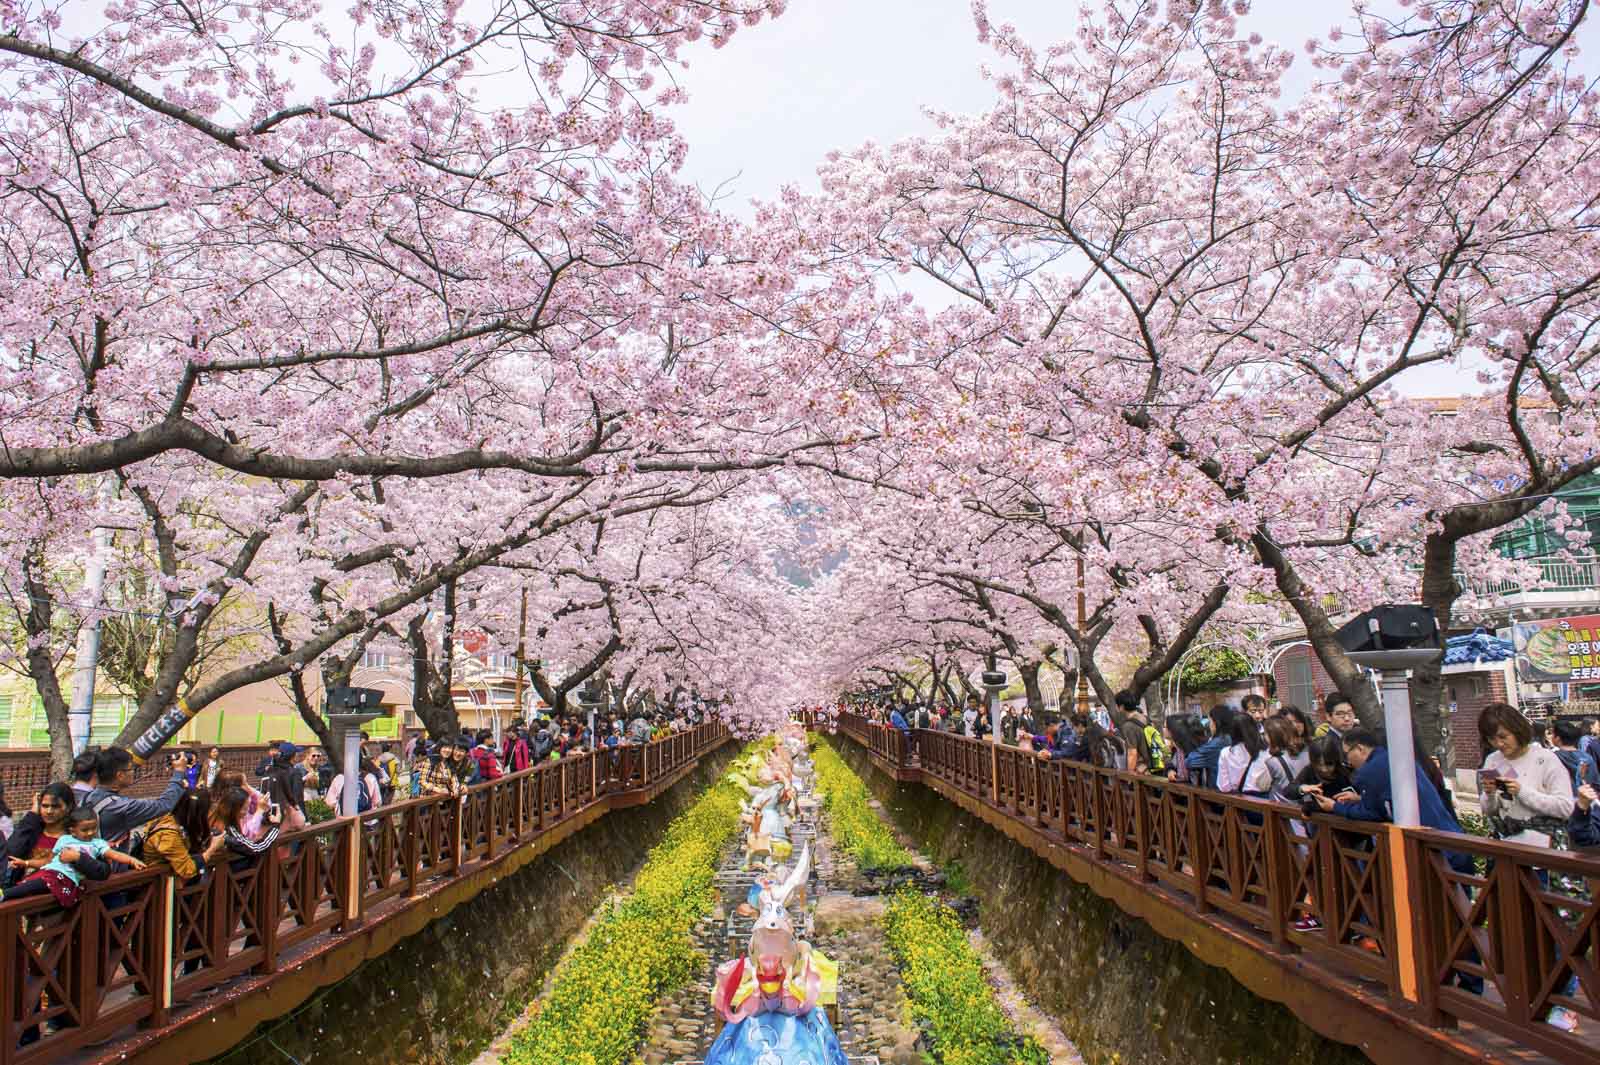 Cherry blossoms in Asia South Korea stream